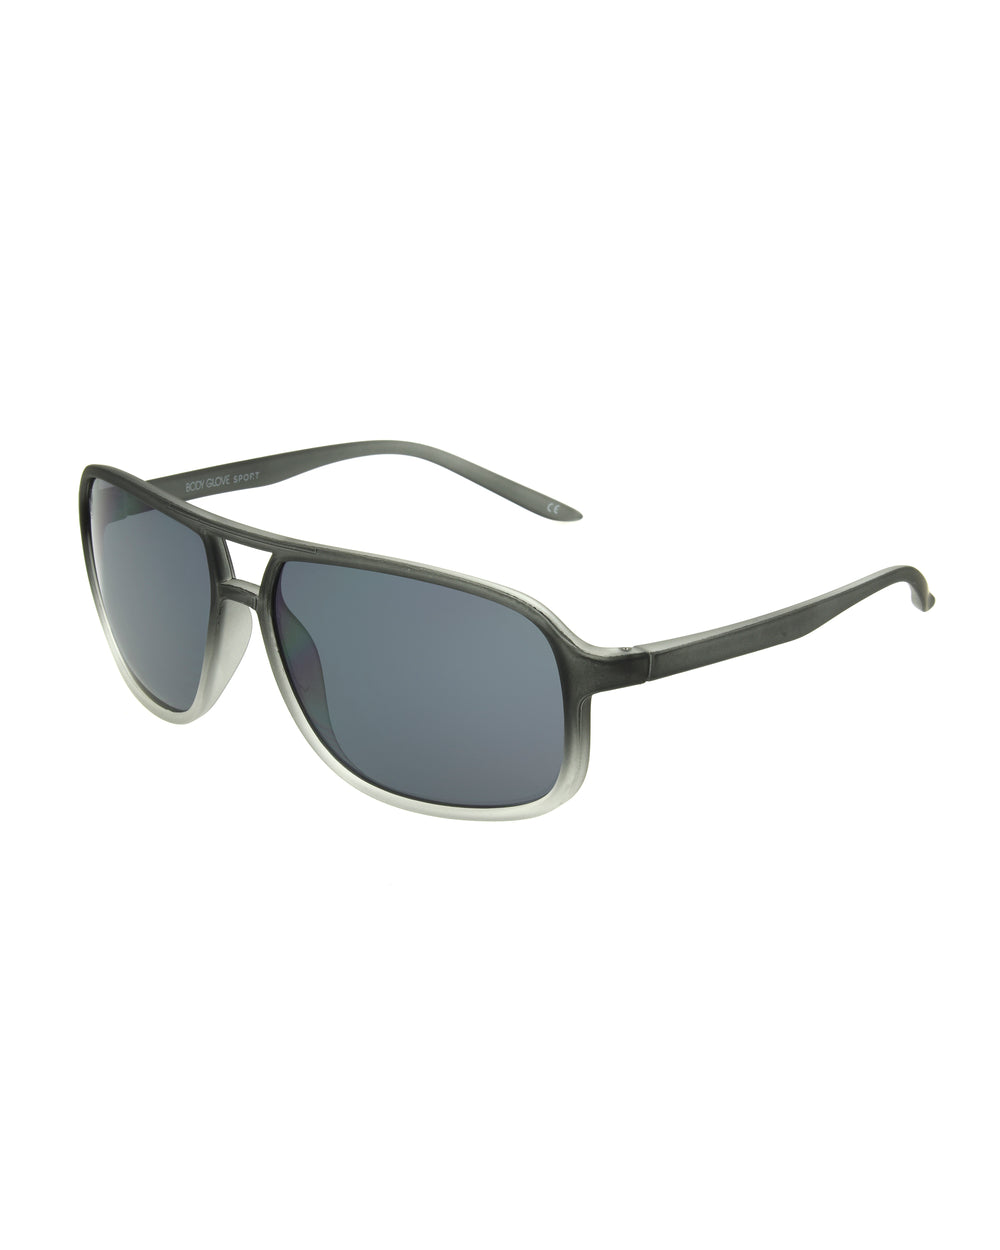 Donnie Aviator Sunglasses - Gray - Body Glove